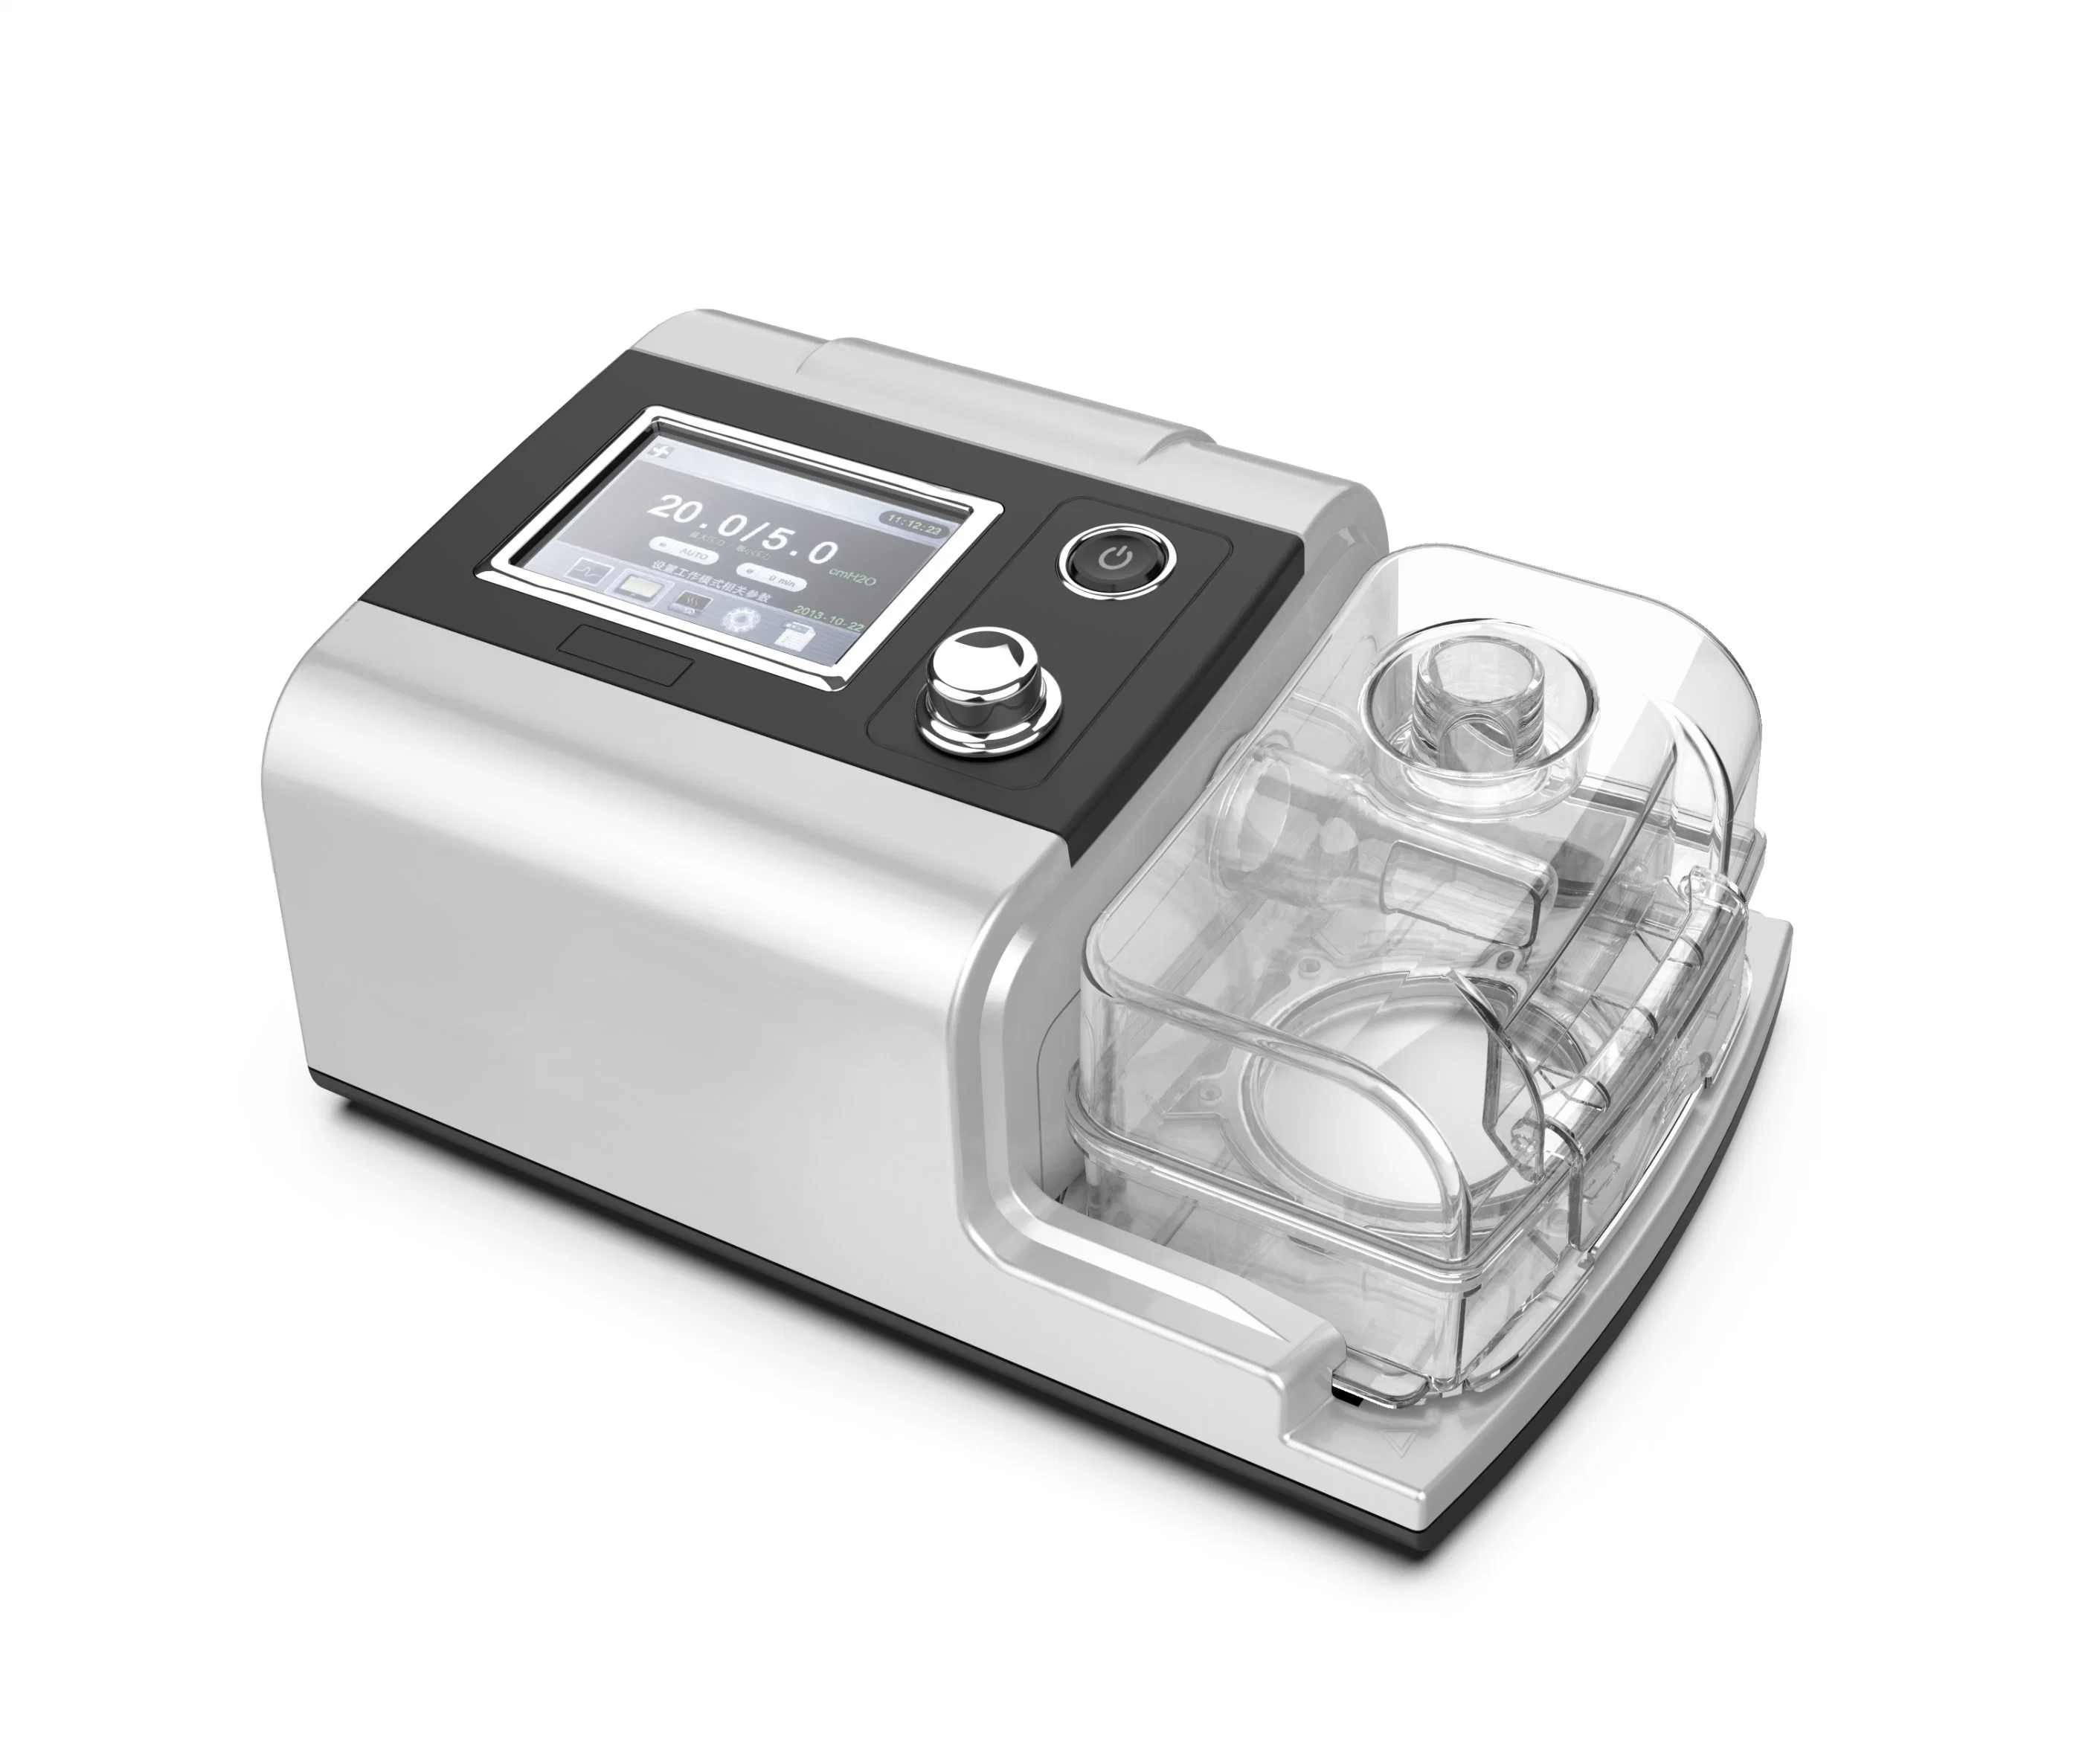 Portable Travel Auto CPAP Medical Sleep Apnea Respiratory Machine with Filter Tube Masque Headgear at Home Use